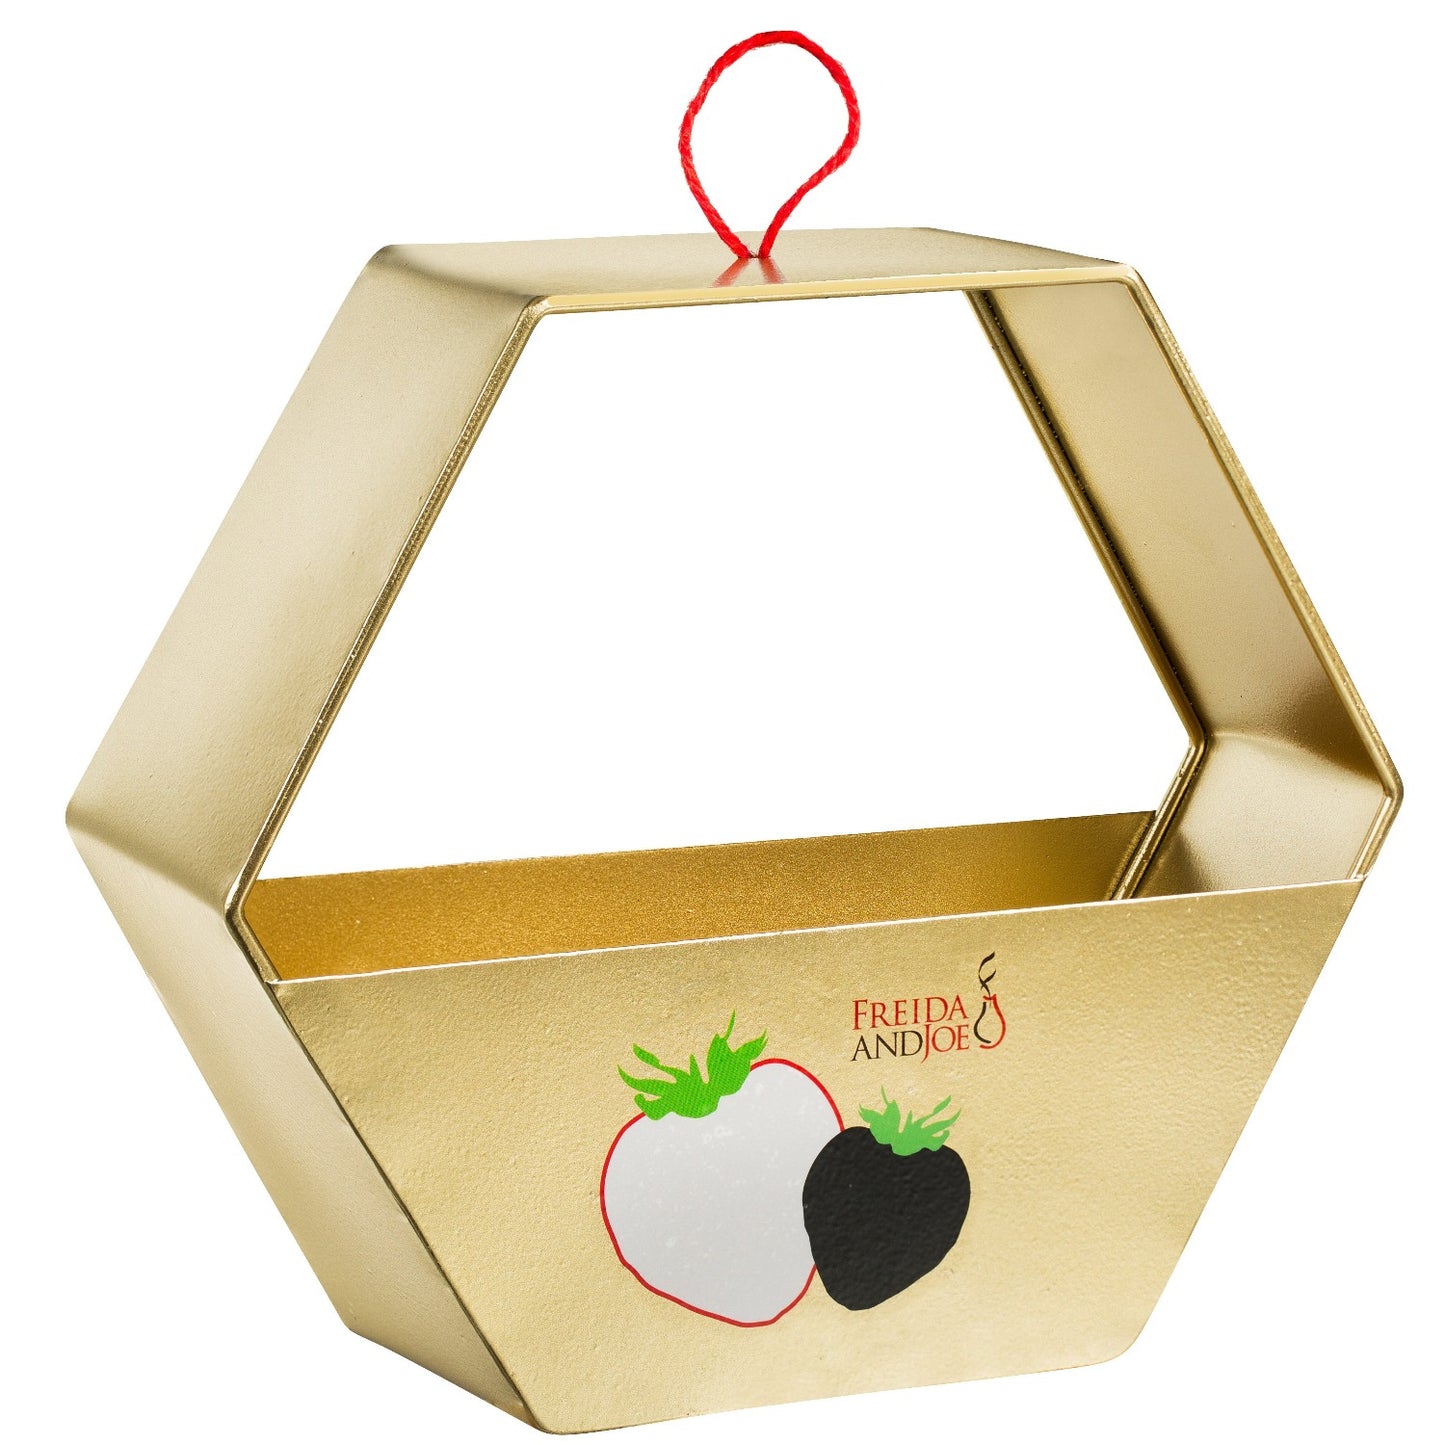 Strawberry Gift Set Gold Hexagon Box